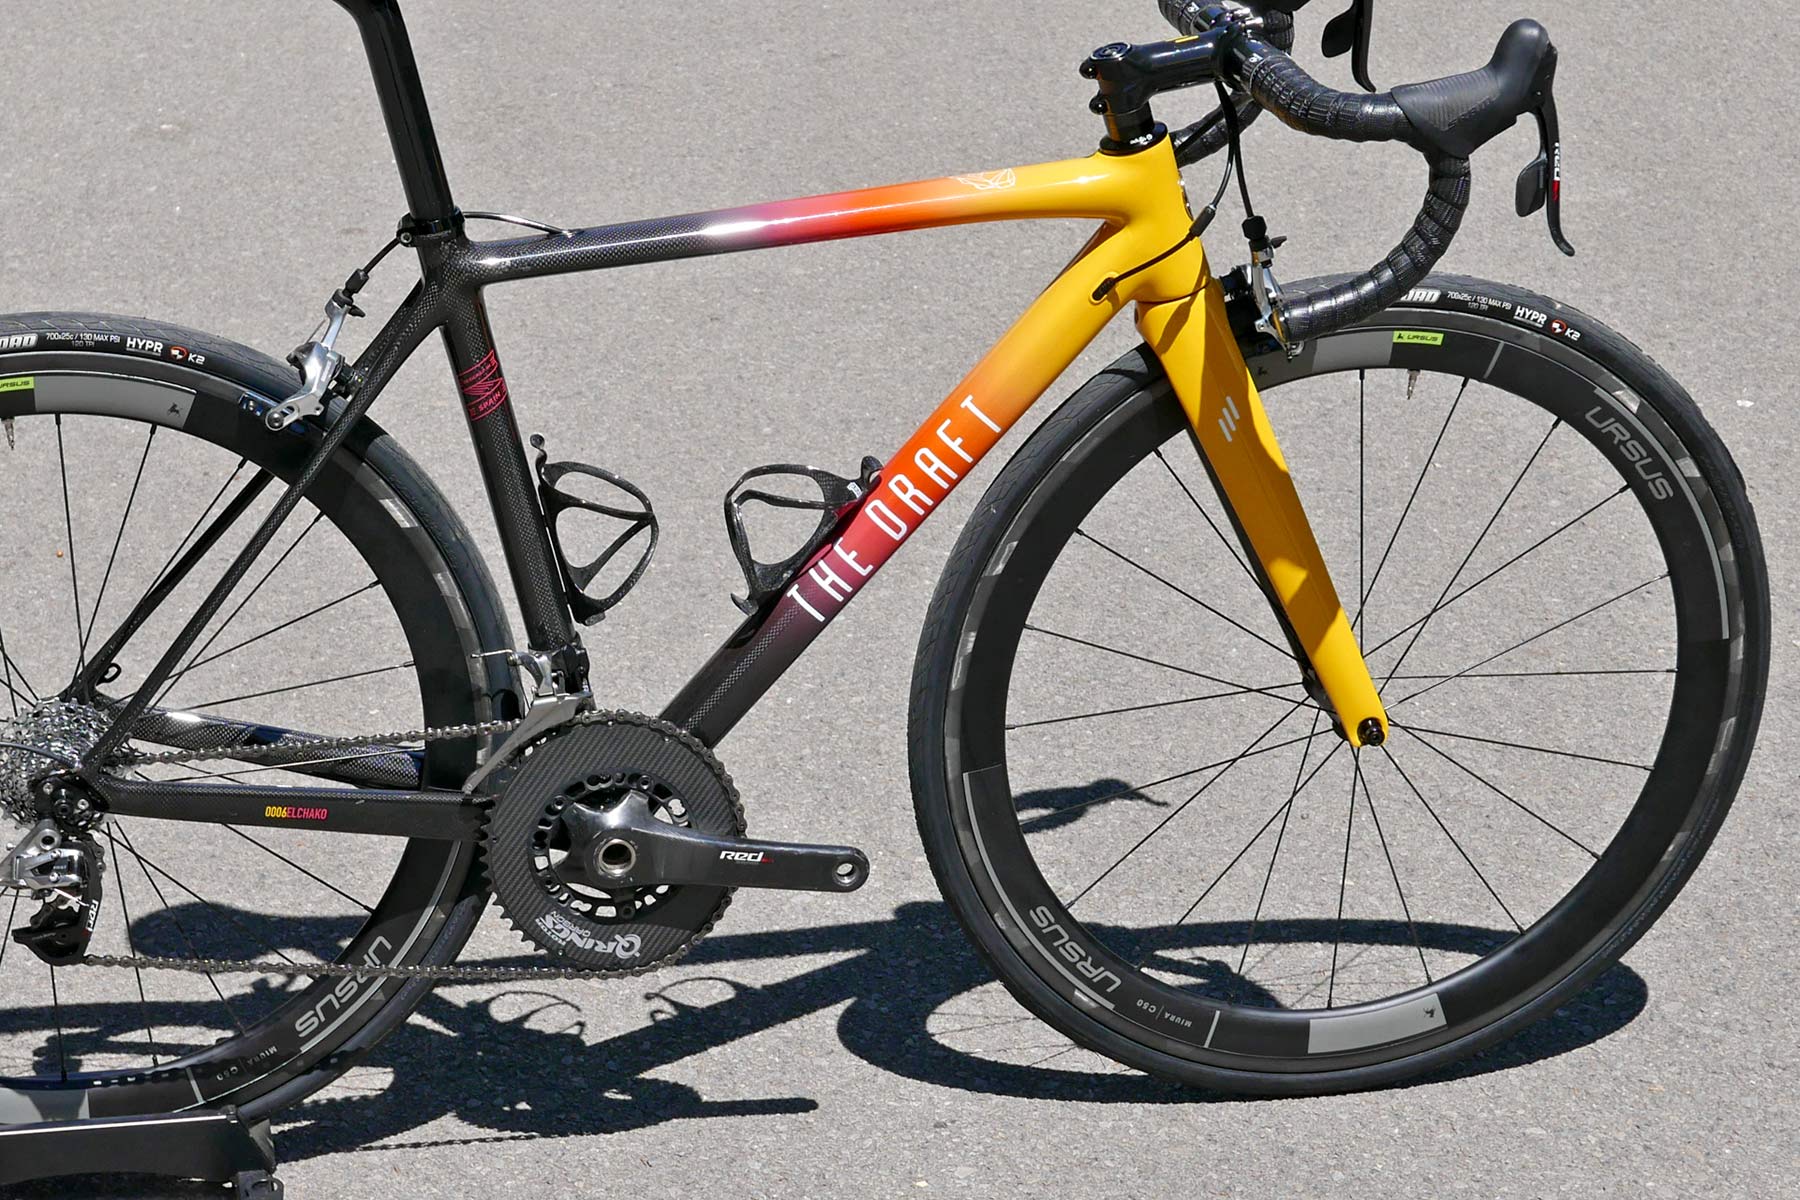 The Draft builds custom Spanish bikes for gravel & road in carbon or steel